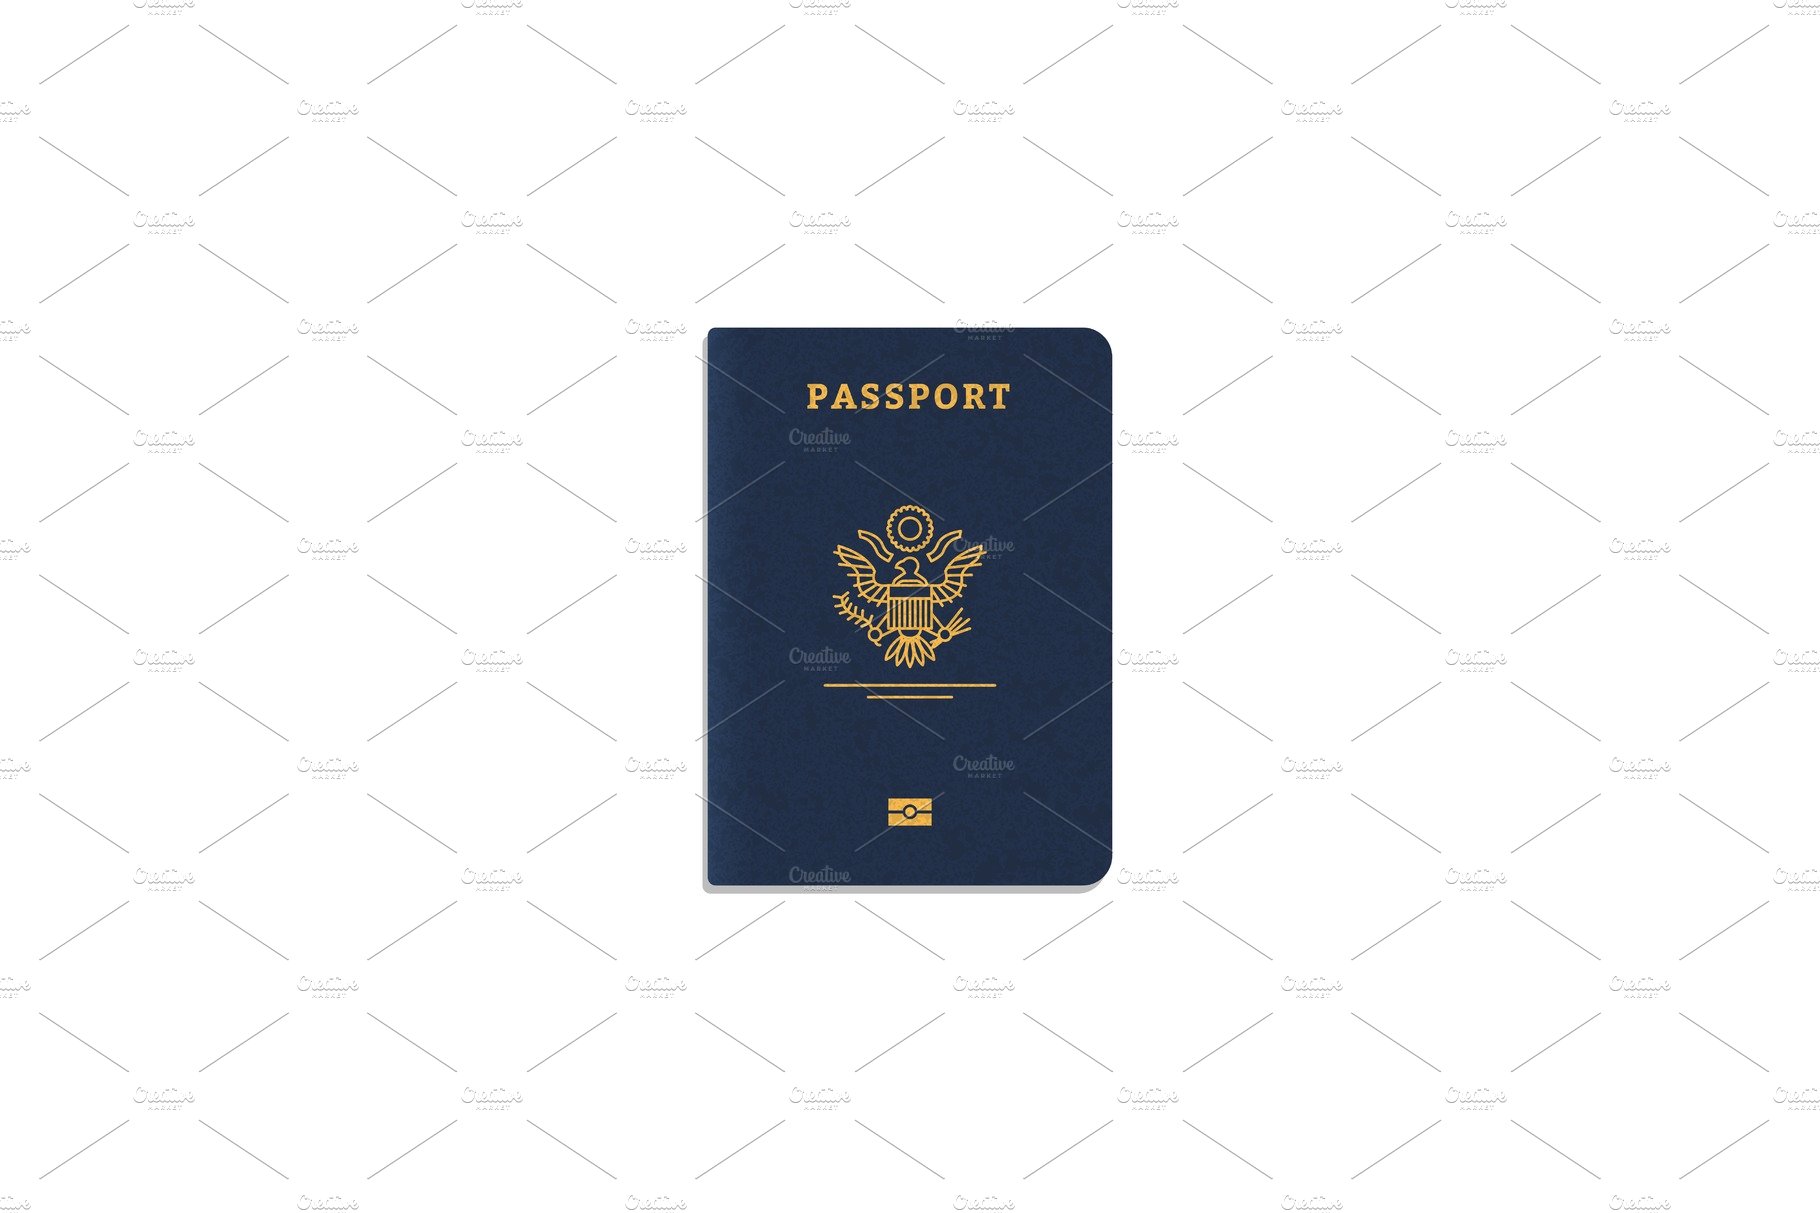 International passport cover cover image.